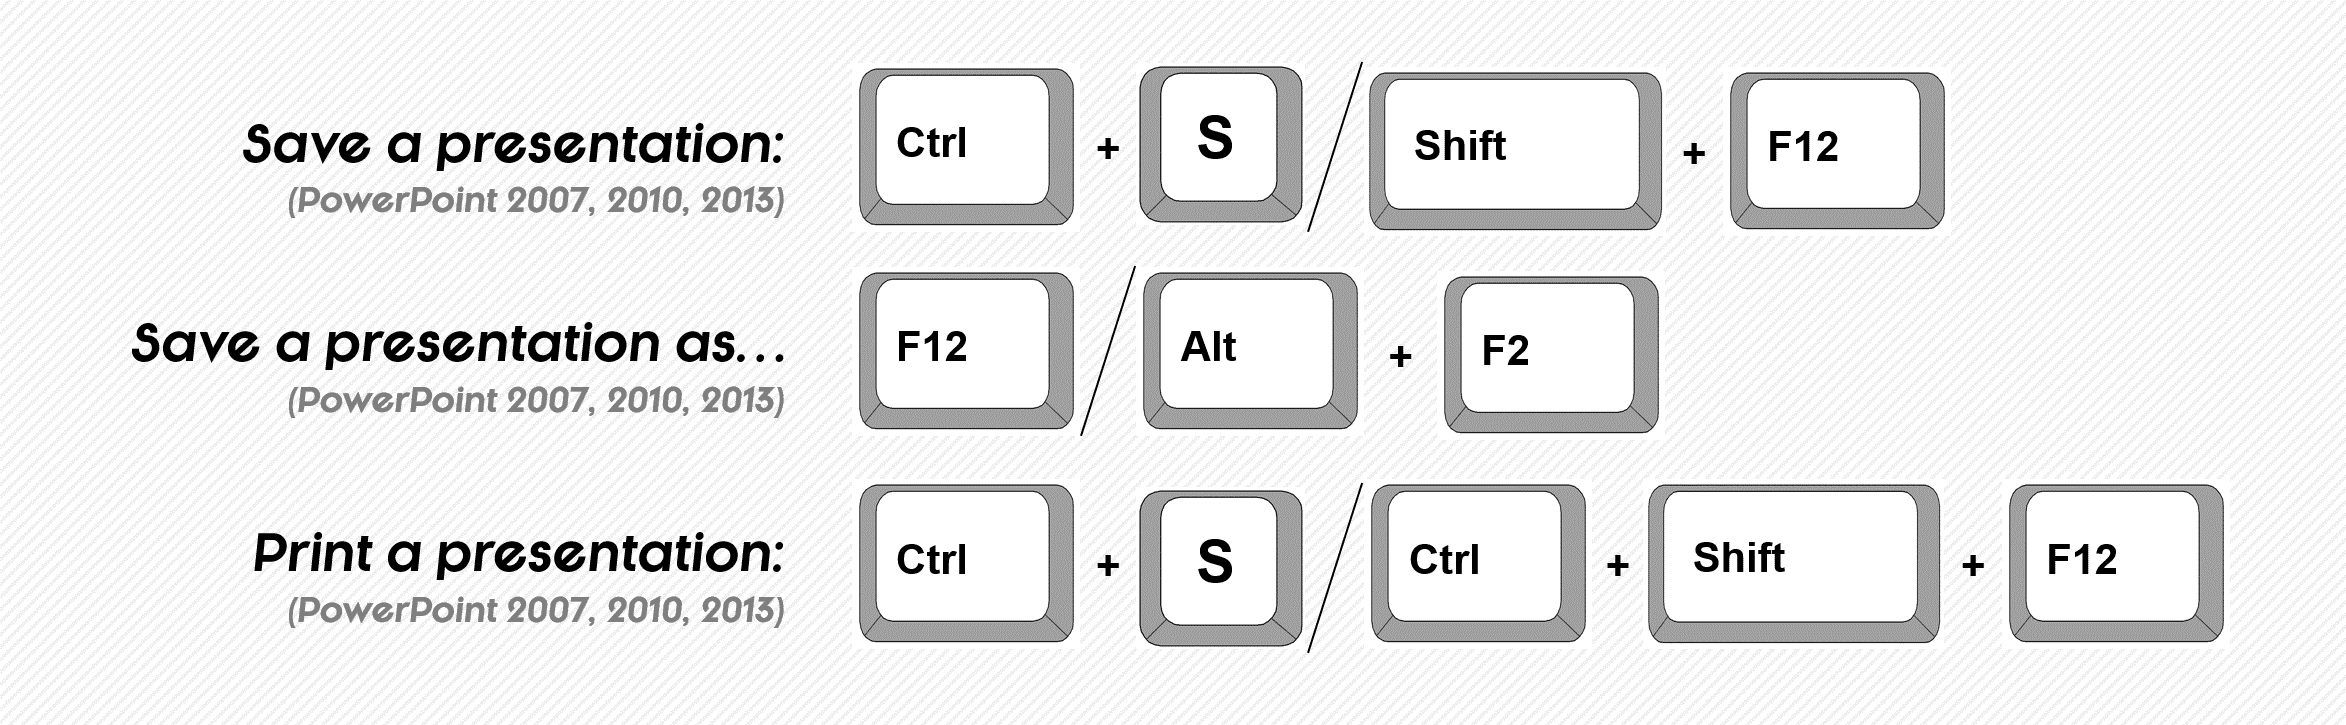 powerpoint presenter view shortcut keys